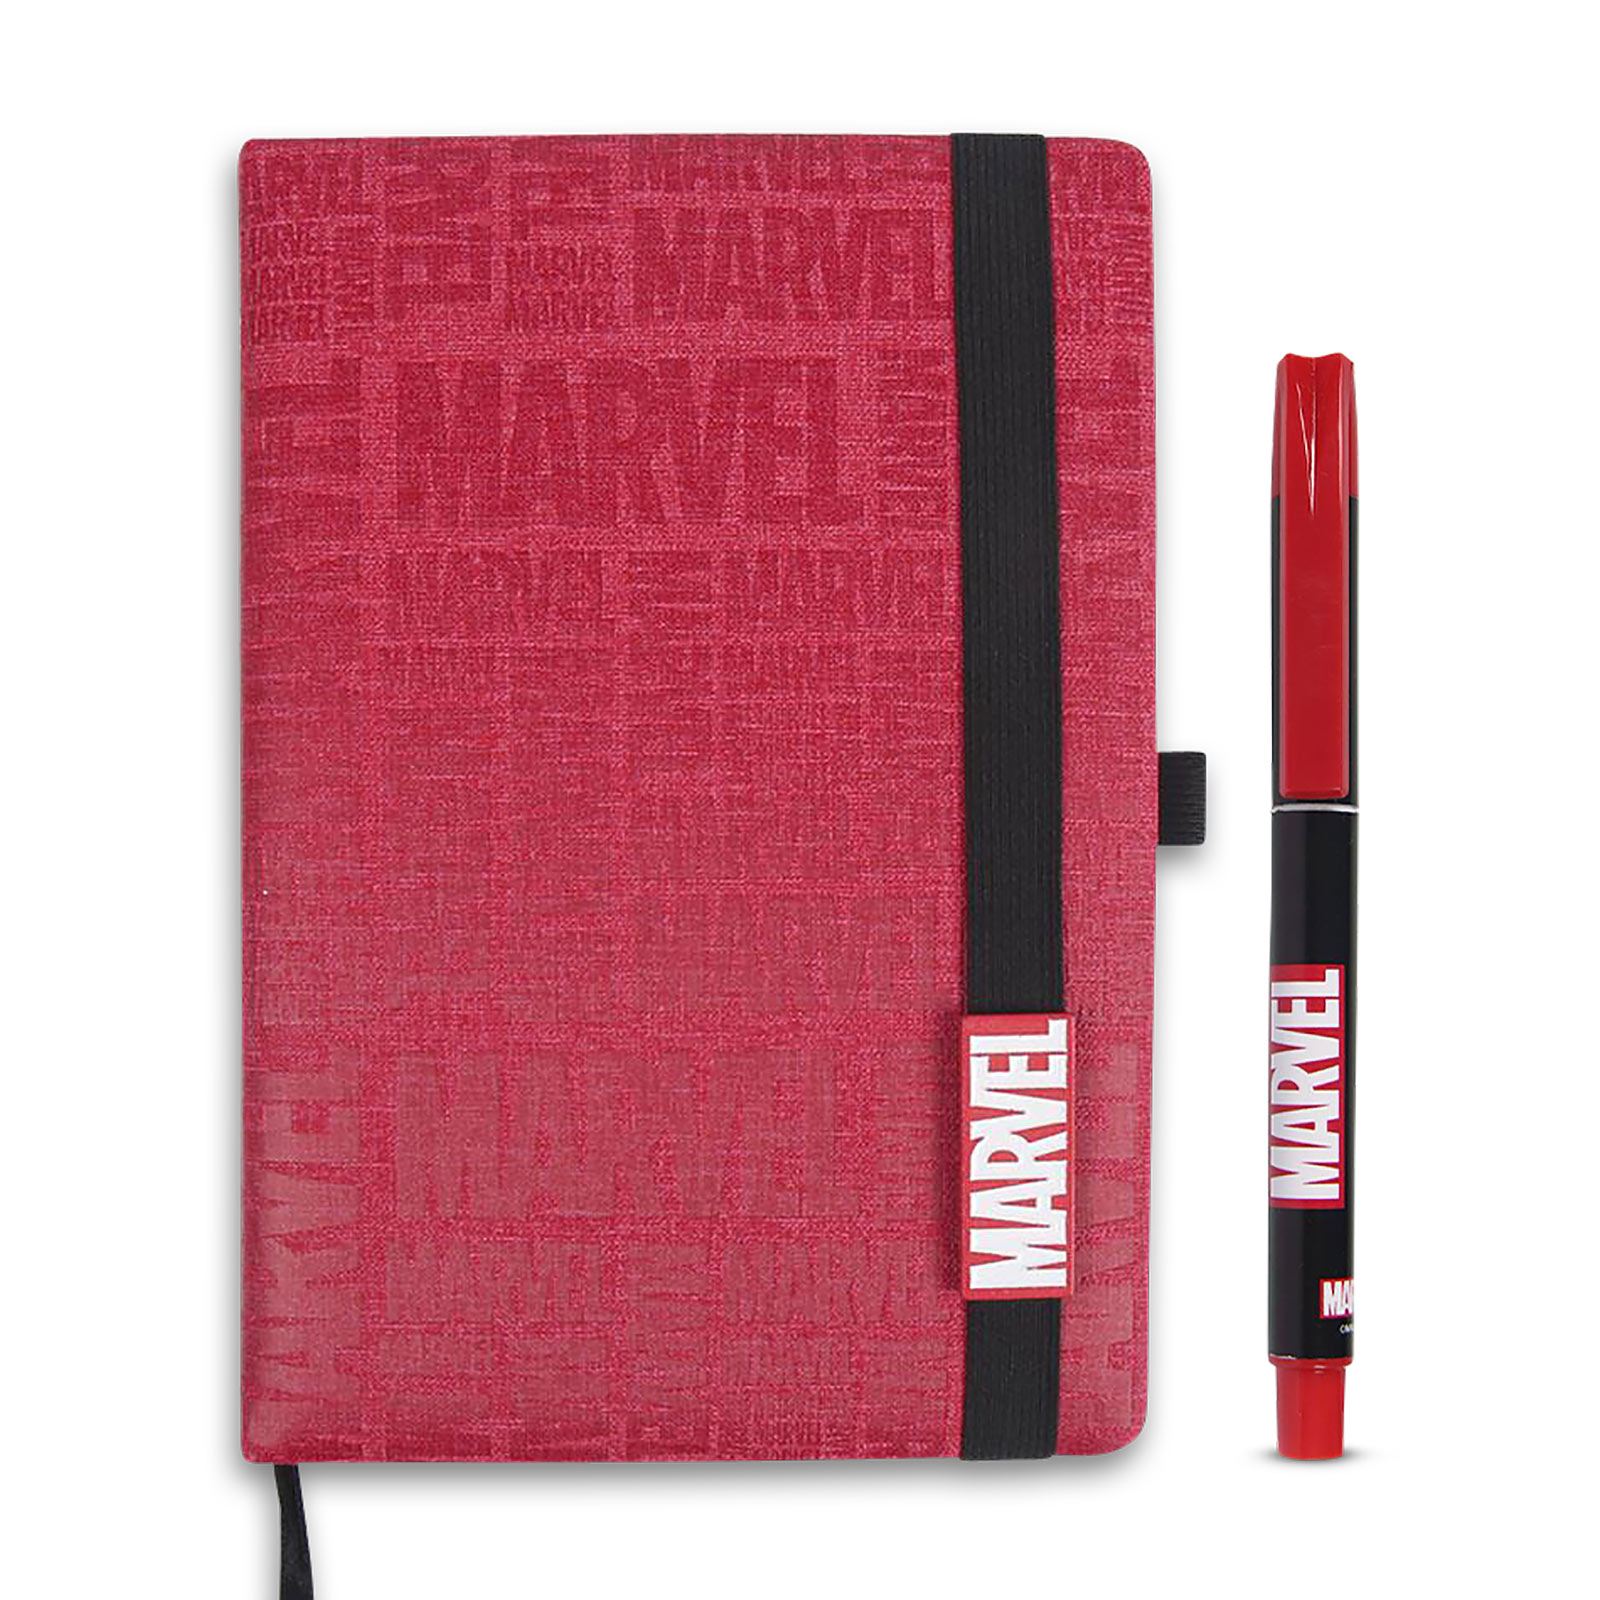 Marvel - 2-piece writing set